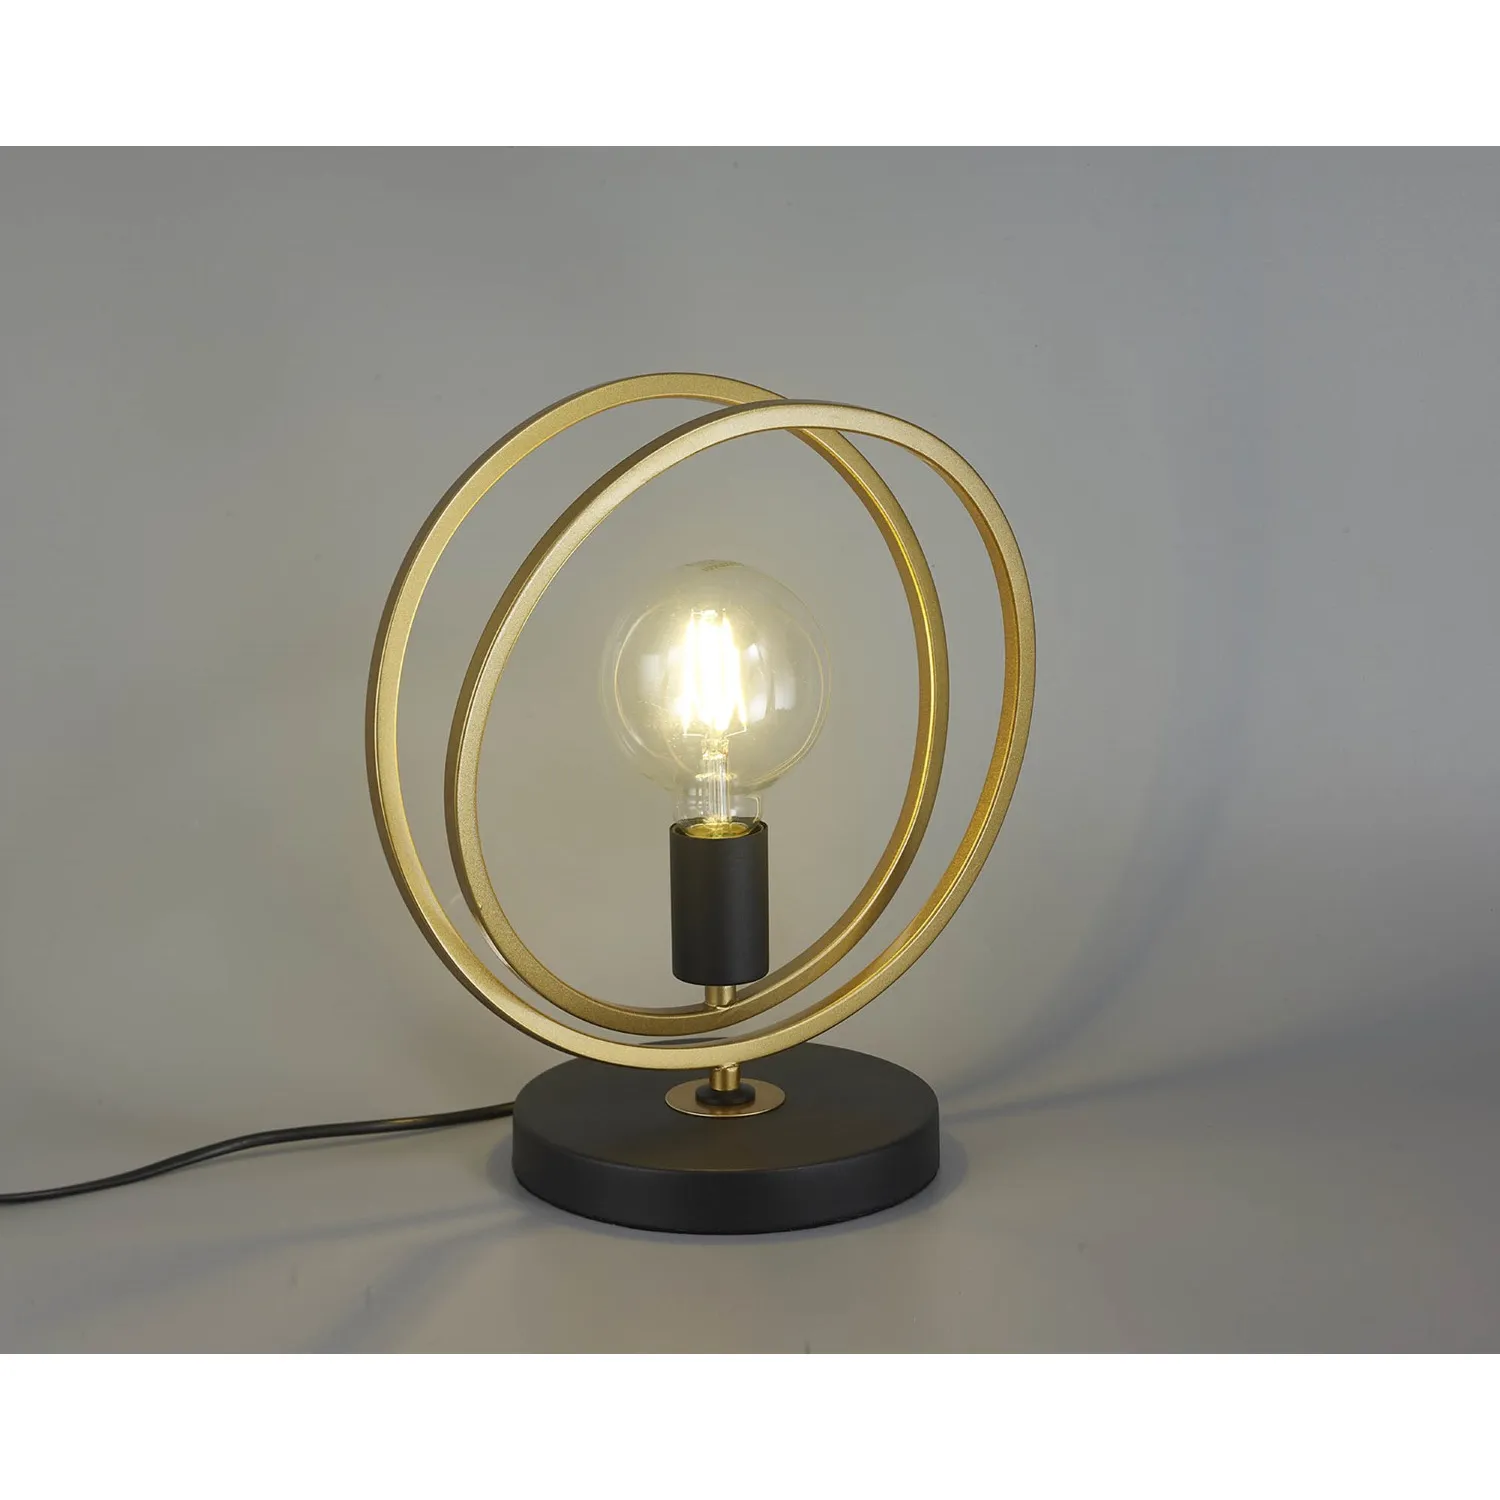 Battersea Double Ring Table Lamp, 1 Light E27, Matt Black Painted Gold, G95 120 Lamp Recommended